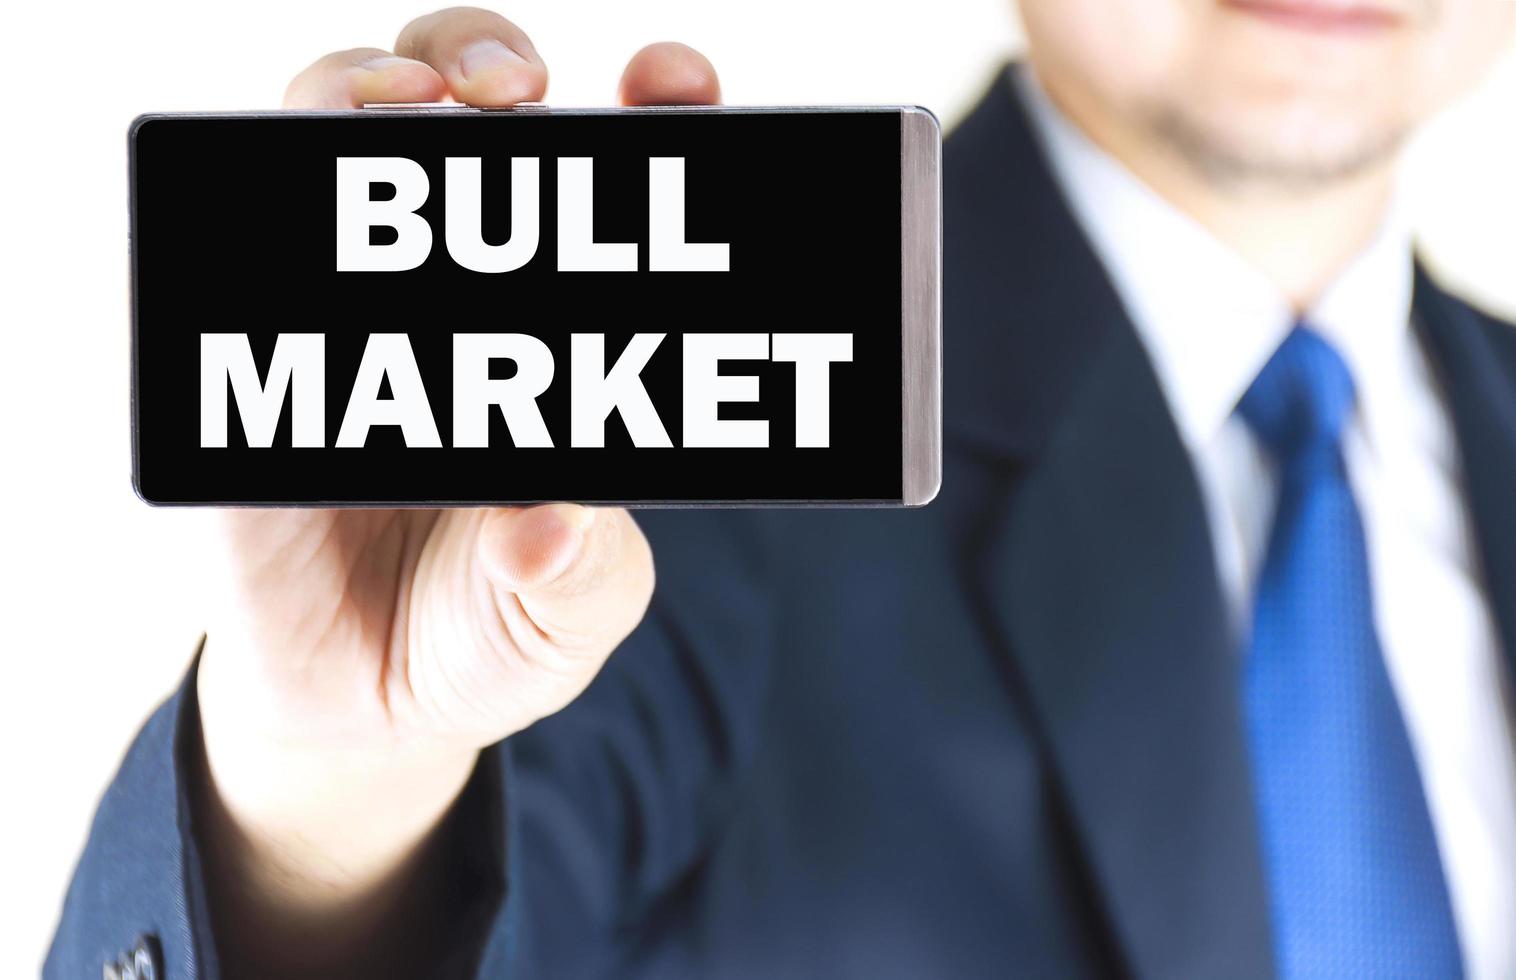 Bull market woord op mobiele telefoon scherm in wazig jonge zakenman hand over witte achtergrond, bedrijfsconcept foto